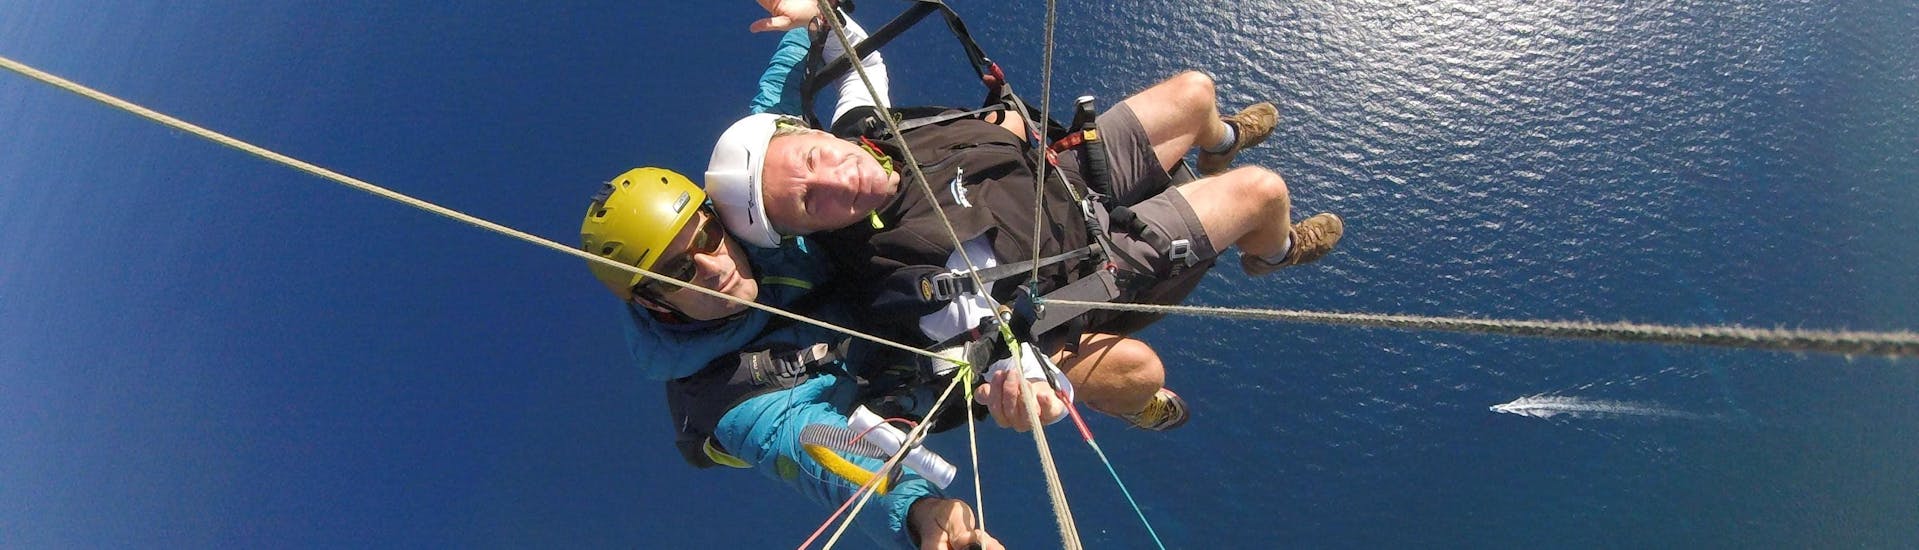 A paragliding pilot from Saint Leu Parapente is performing a Tandem Paragliding Flight - Discovery 20min over the Baie de Saint Leu in Reunion Island.